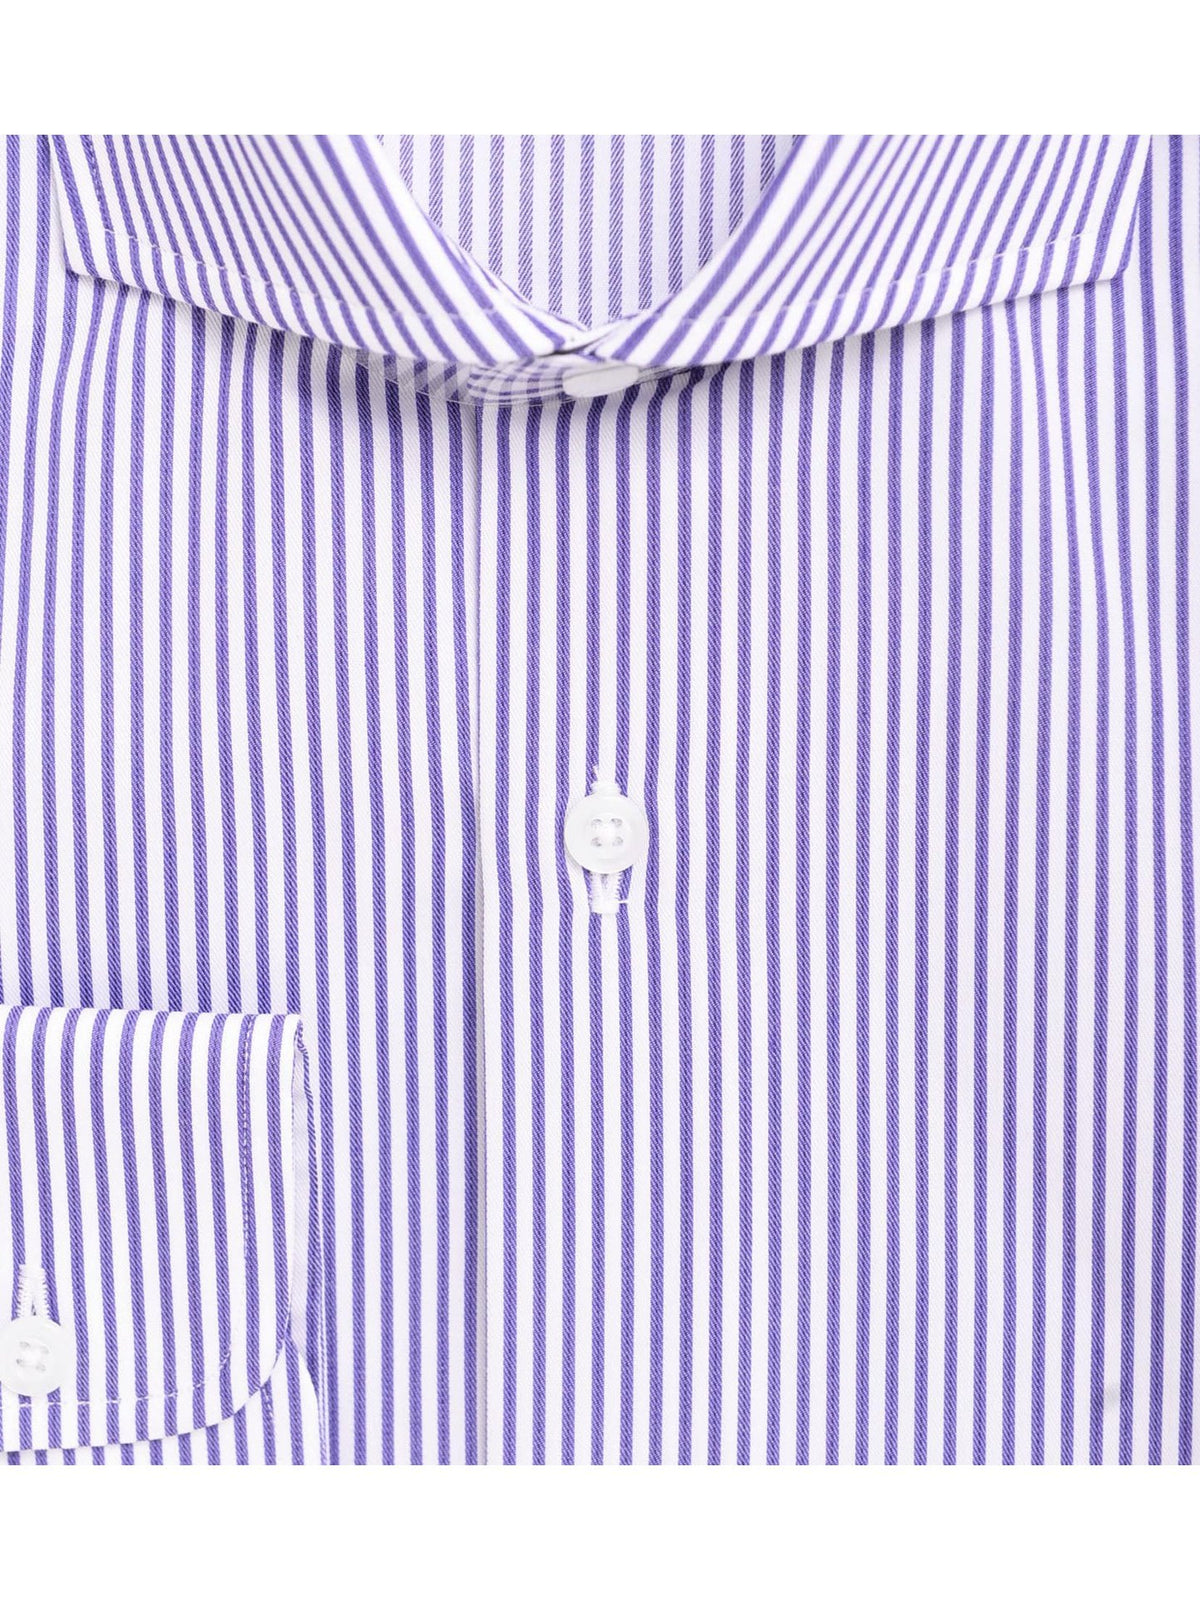 Modena SHIRTS Mens Slim Fit Purple Striped Spread Collar Cotton Blend Dress Shirt